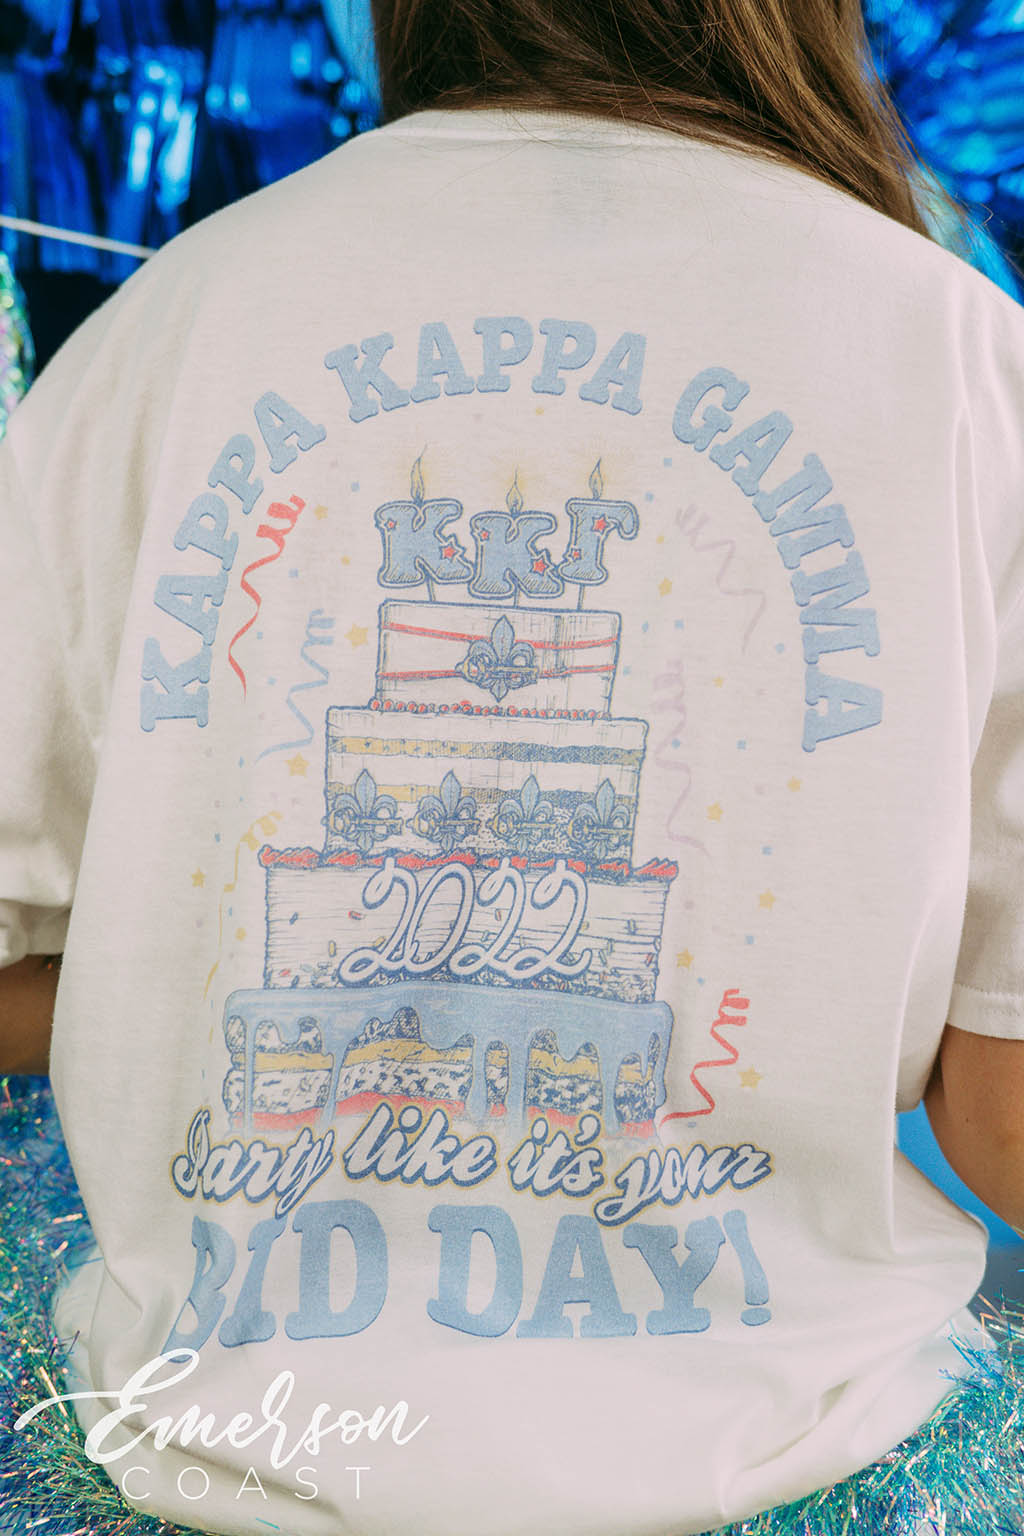 Kappa Kappa Gamma Bid Day Birthday Party Tee Emerson Coast